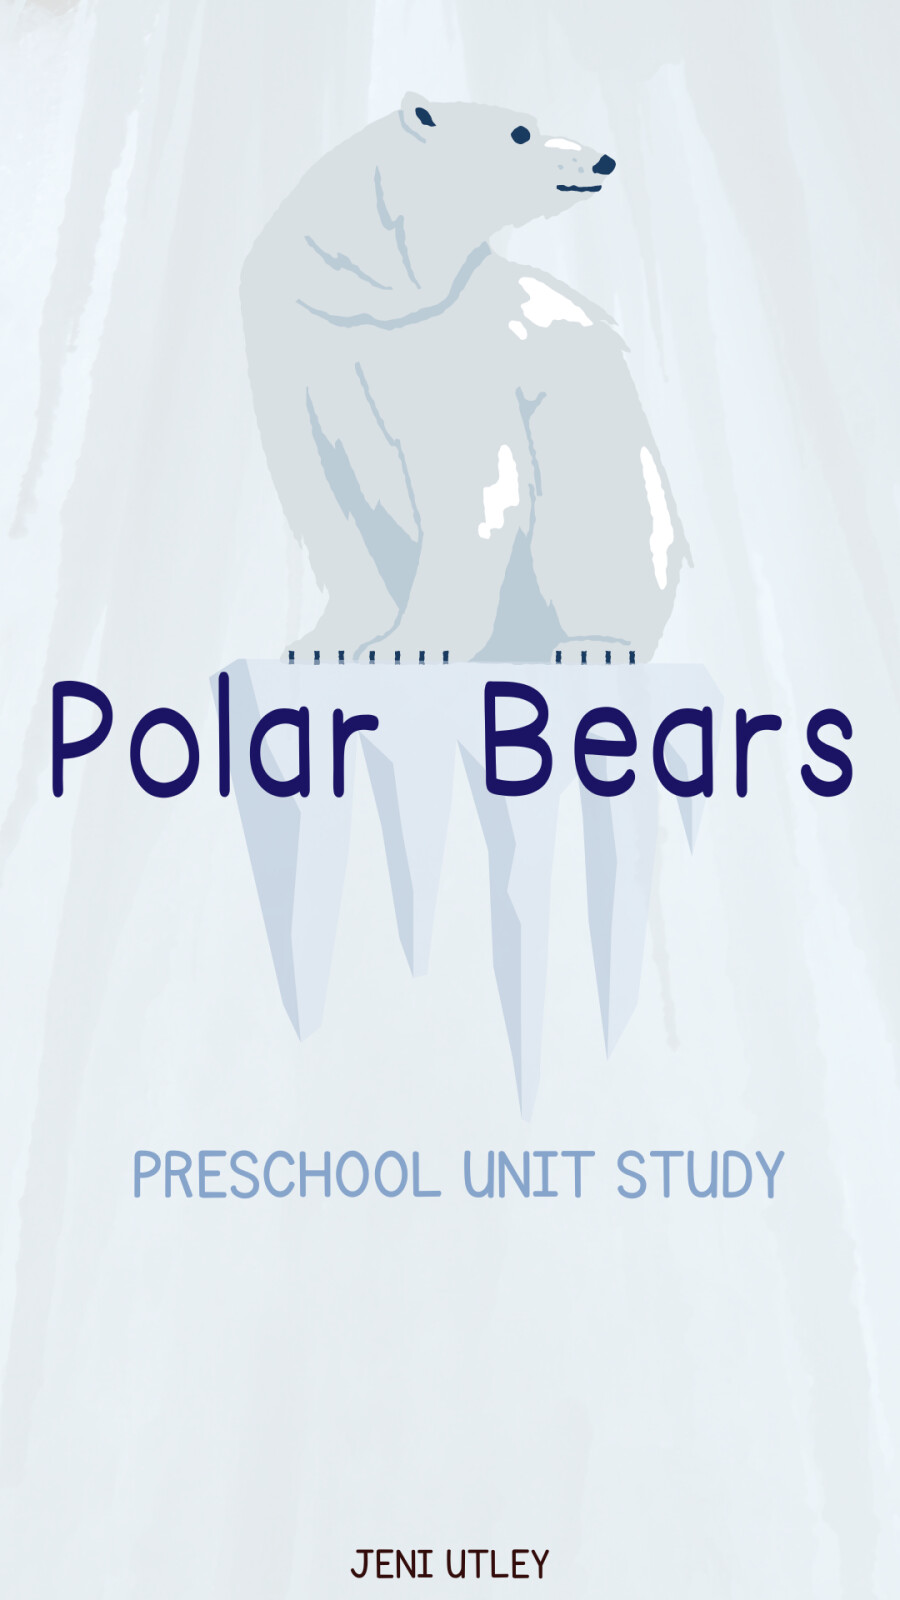 Polar Bear Unit Study for Preschool